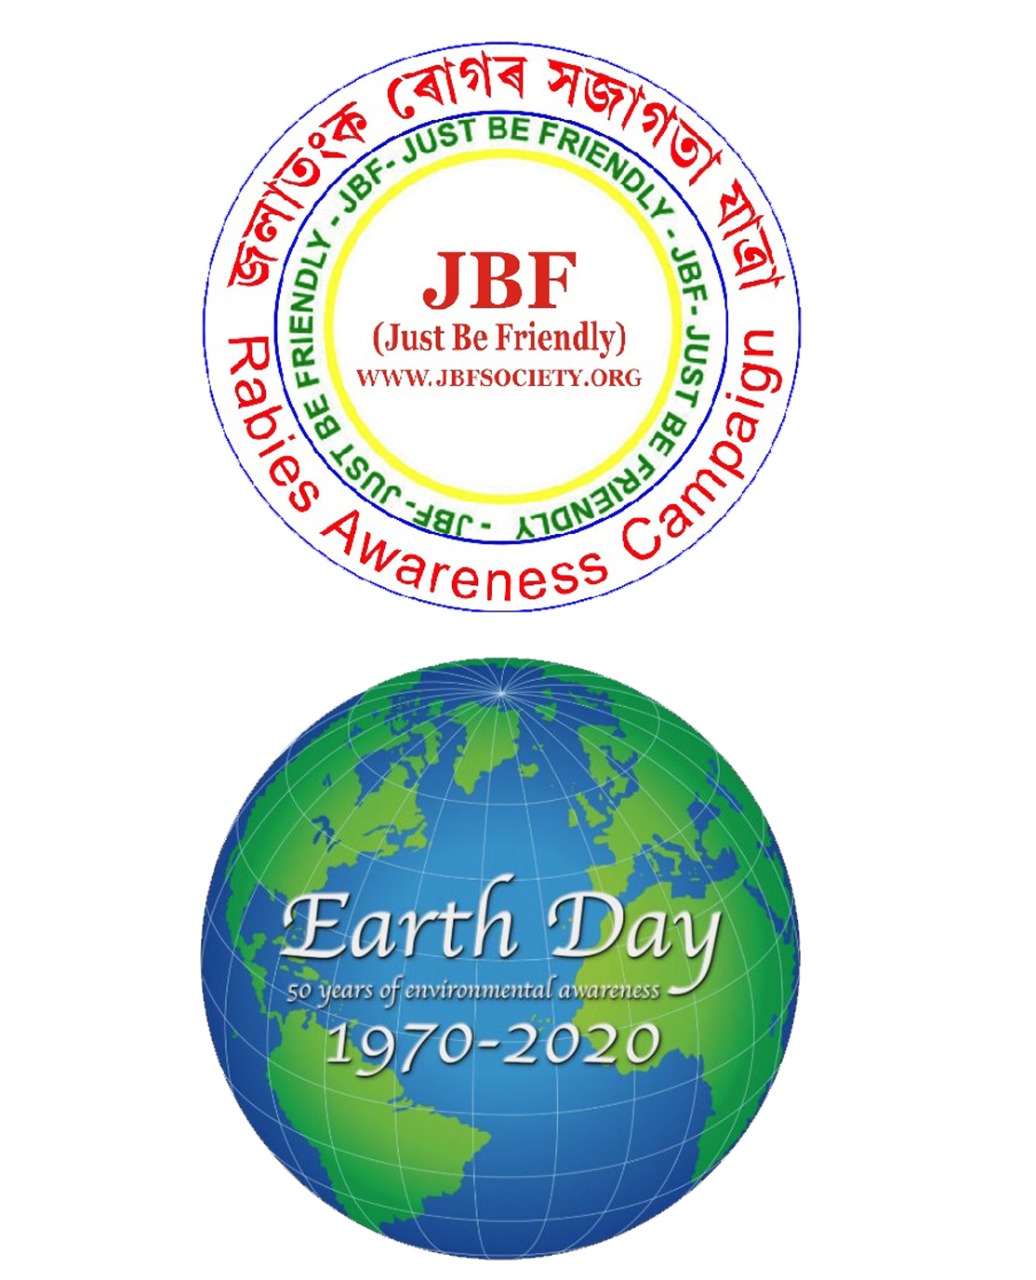 EARTH DAY 2020 – JBF